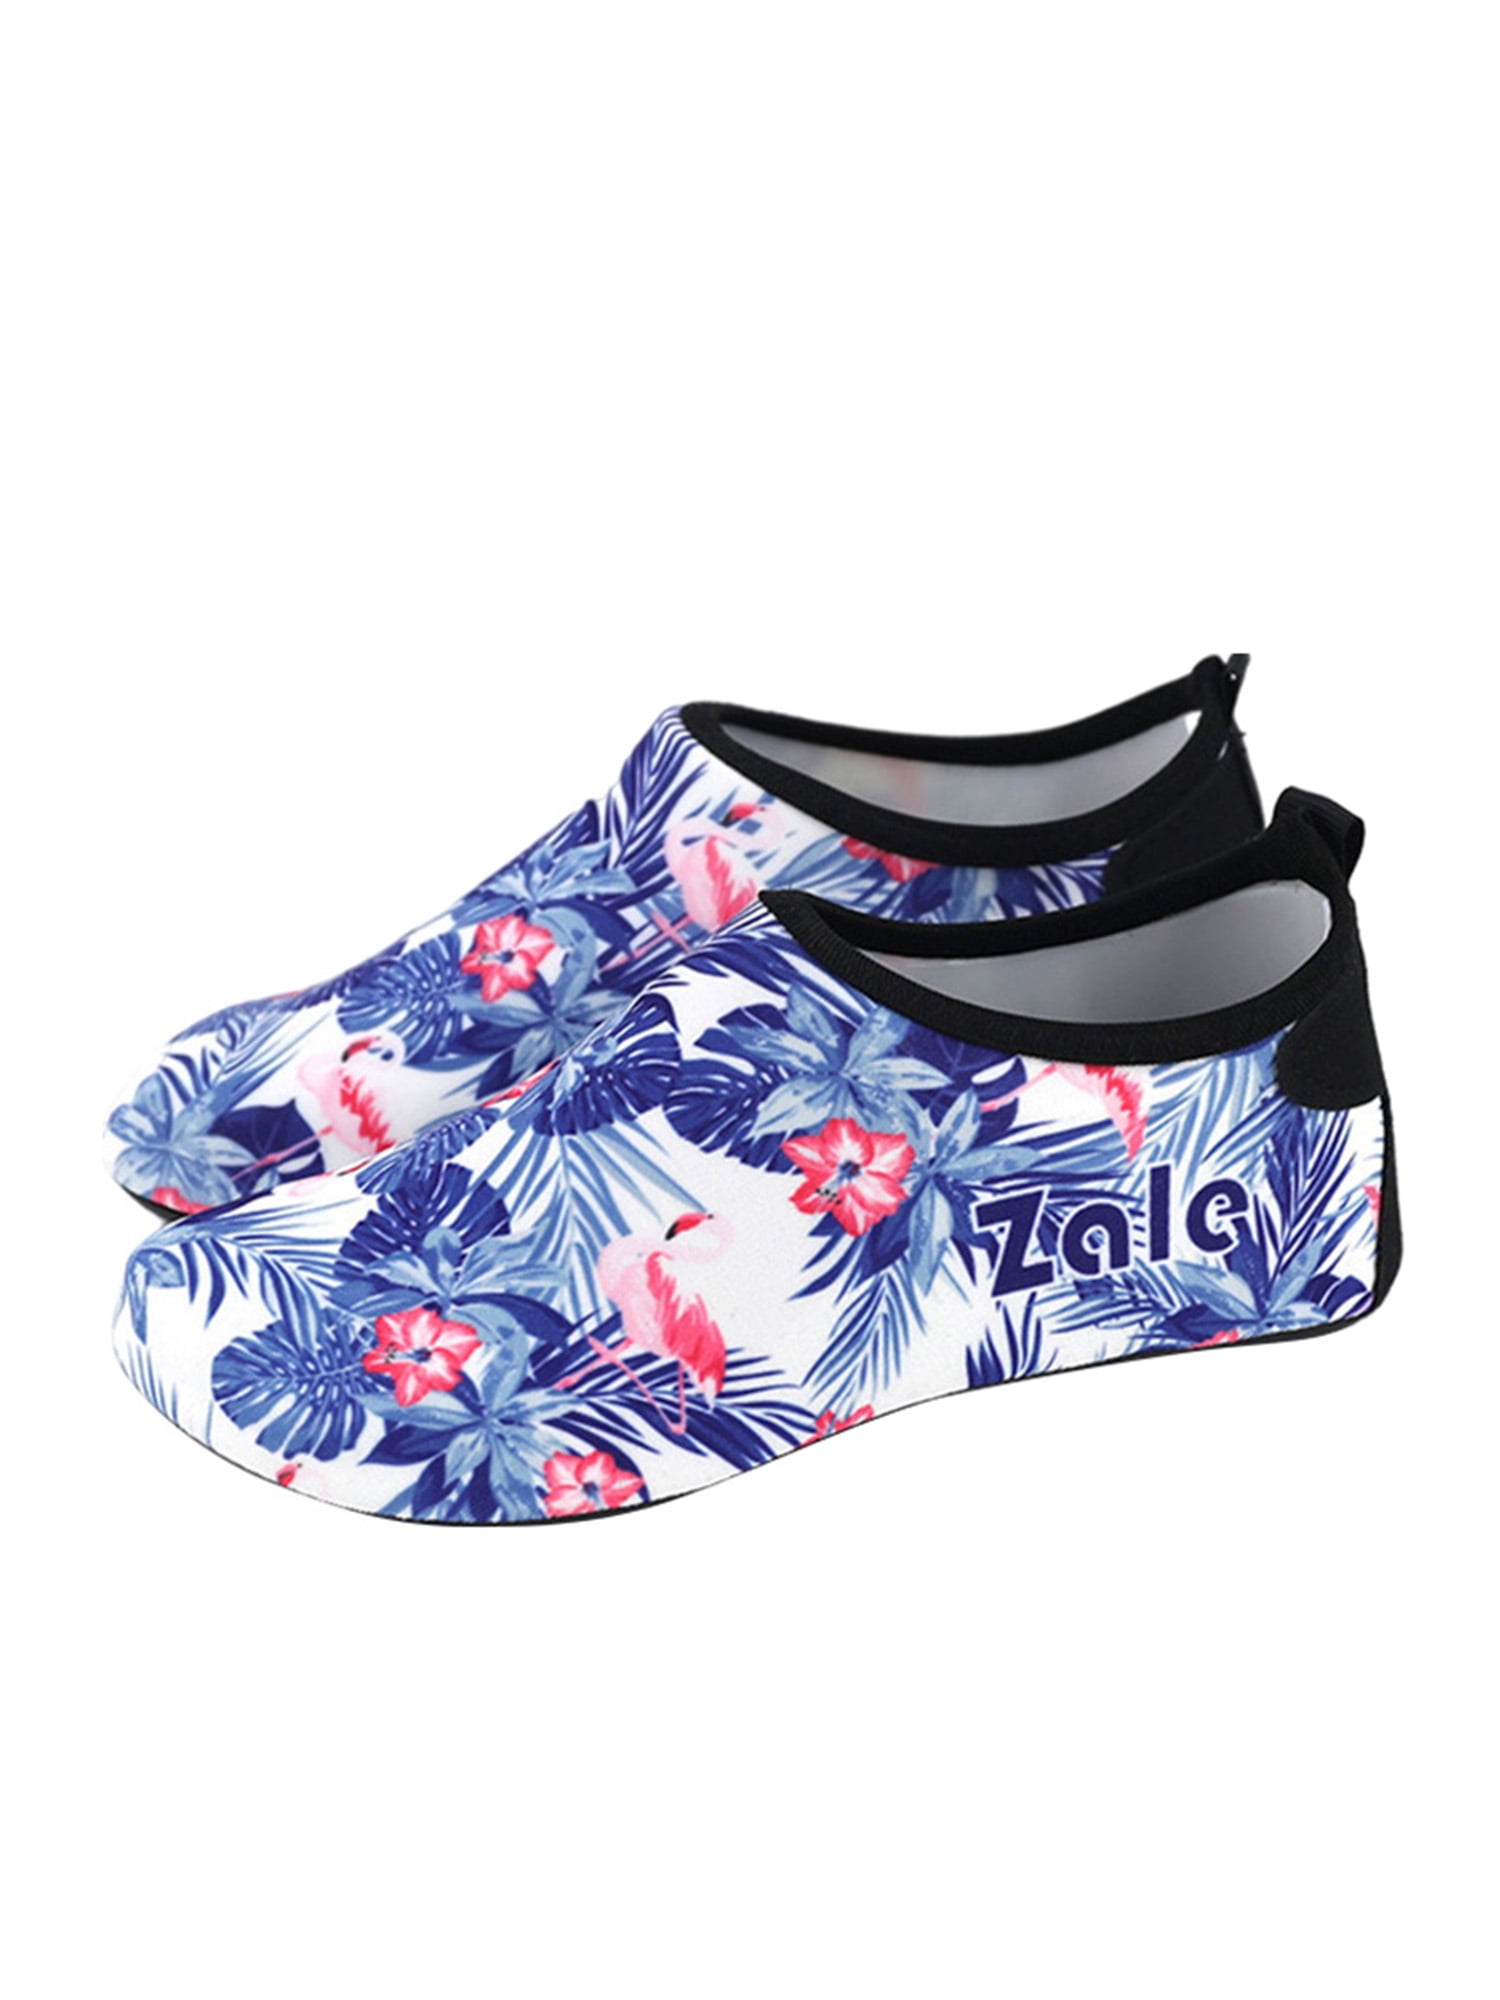 Flamingo Water Shoes for Women Men Barefoot Aqua Surf Yoga Socks 